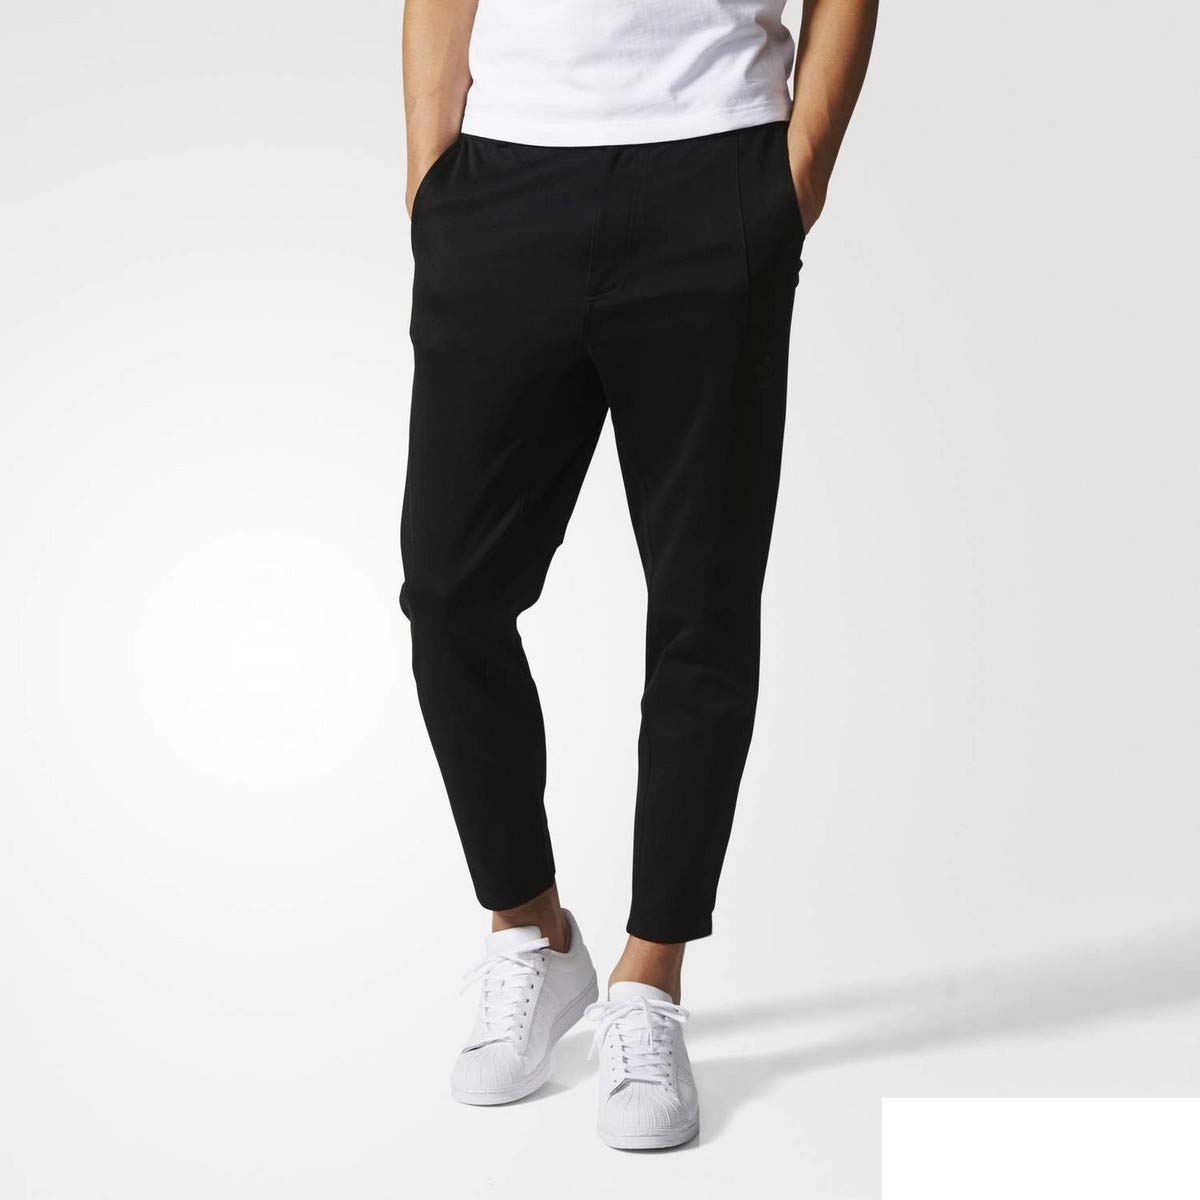 Adidas Stitch-Crease Trefoil Track Pants Black 3-Stripe Size XS Taper  Zip-Ankle | eBay